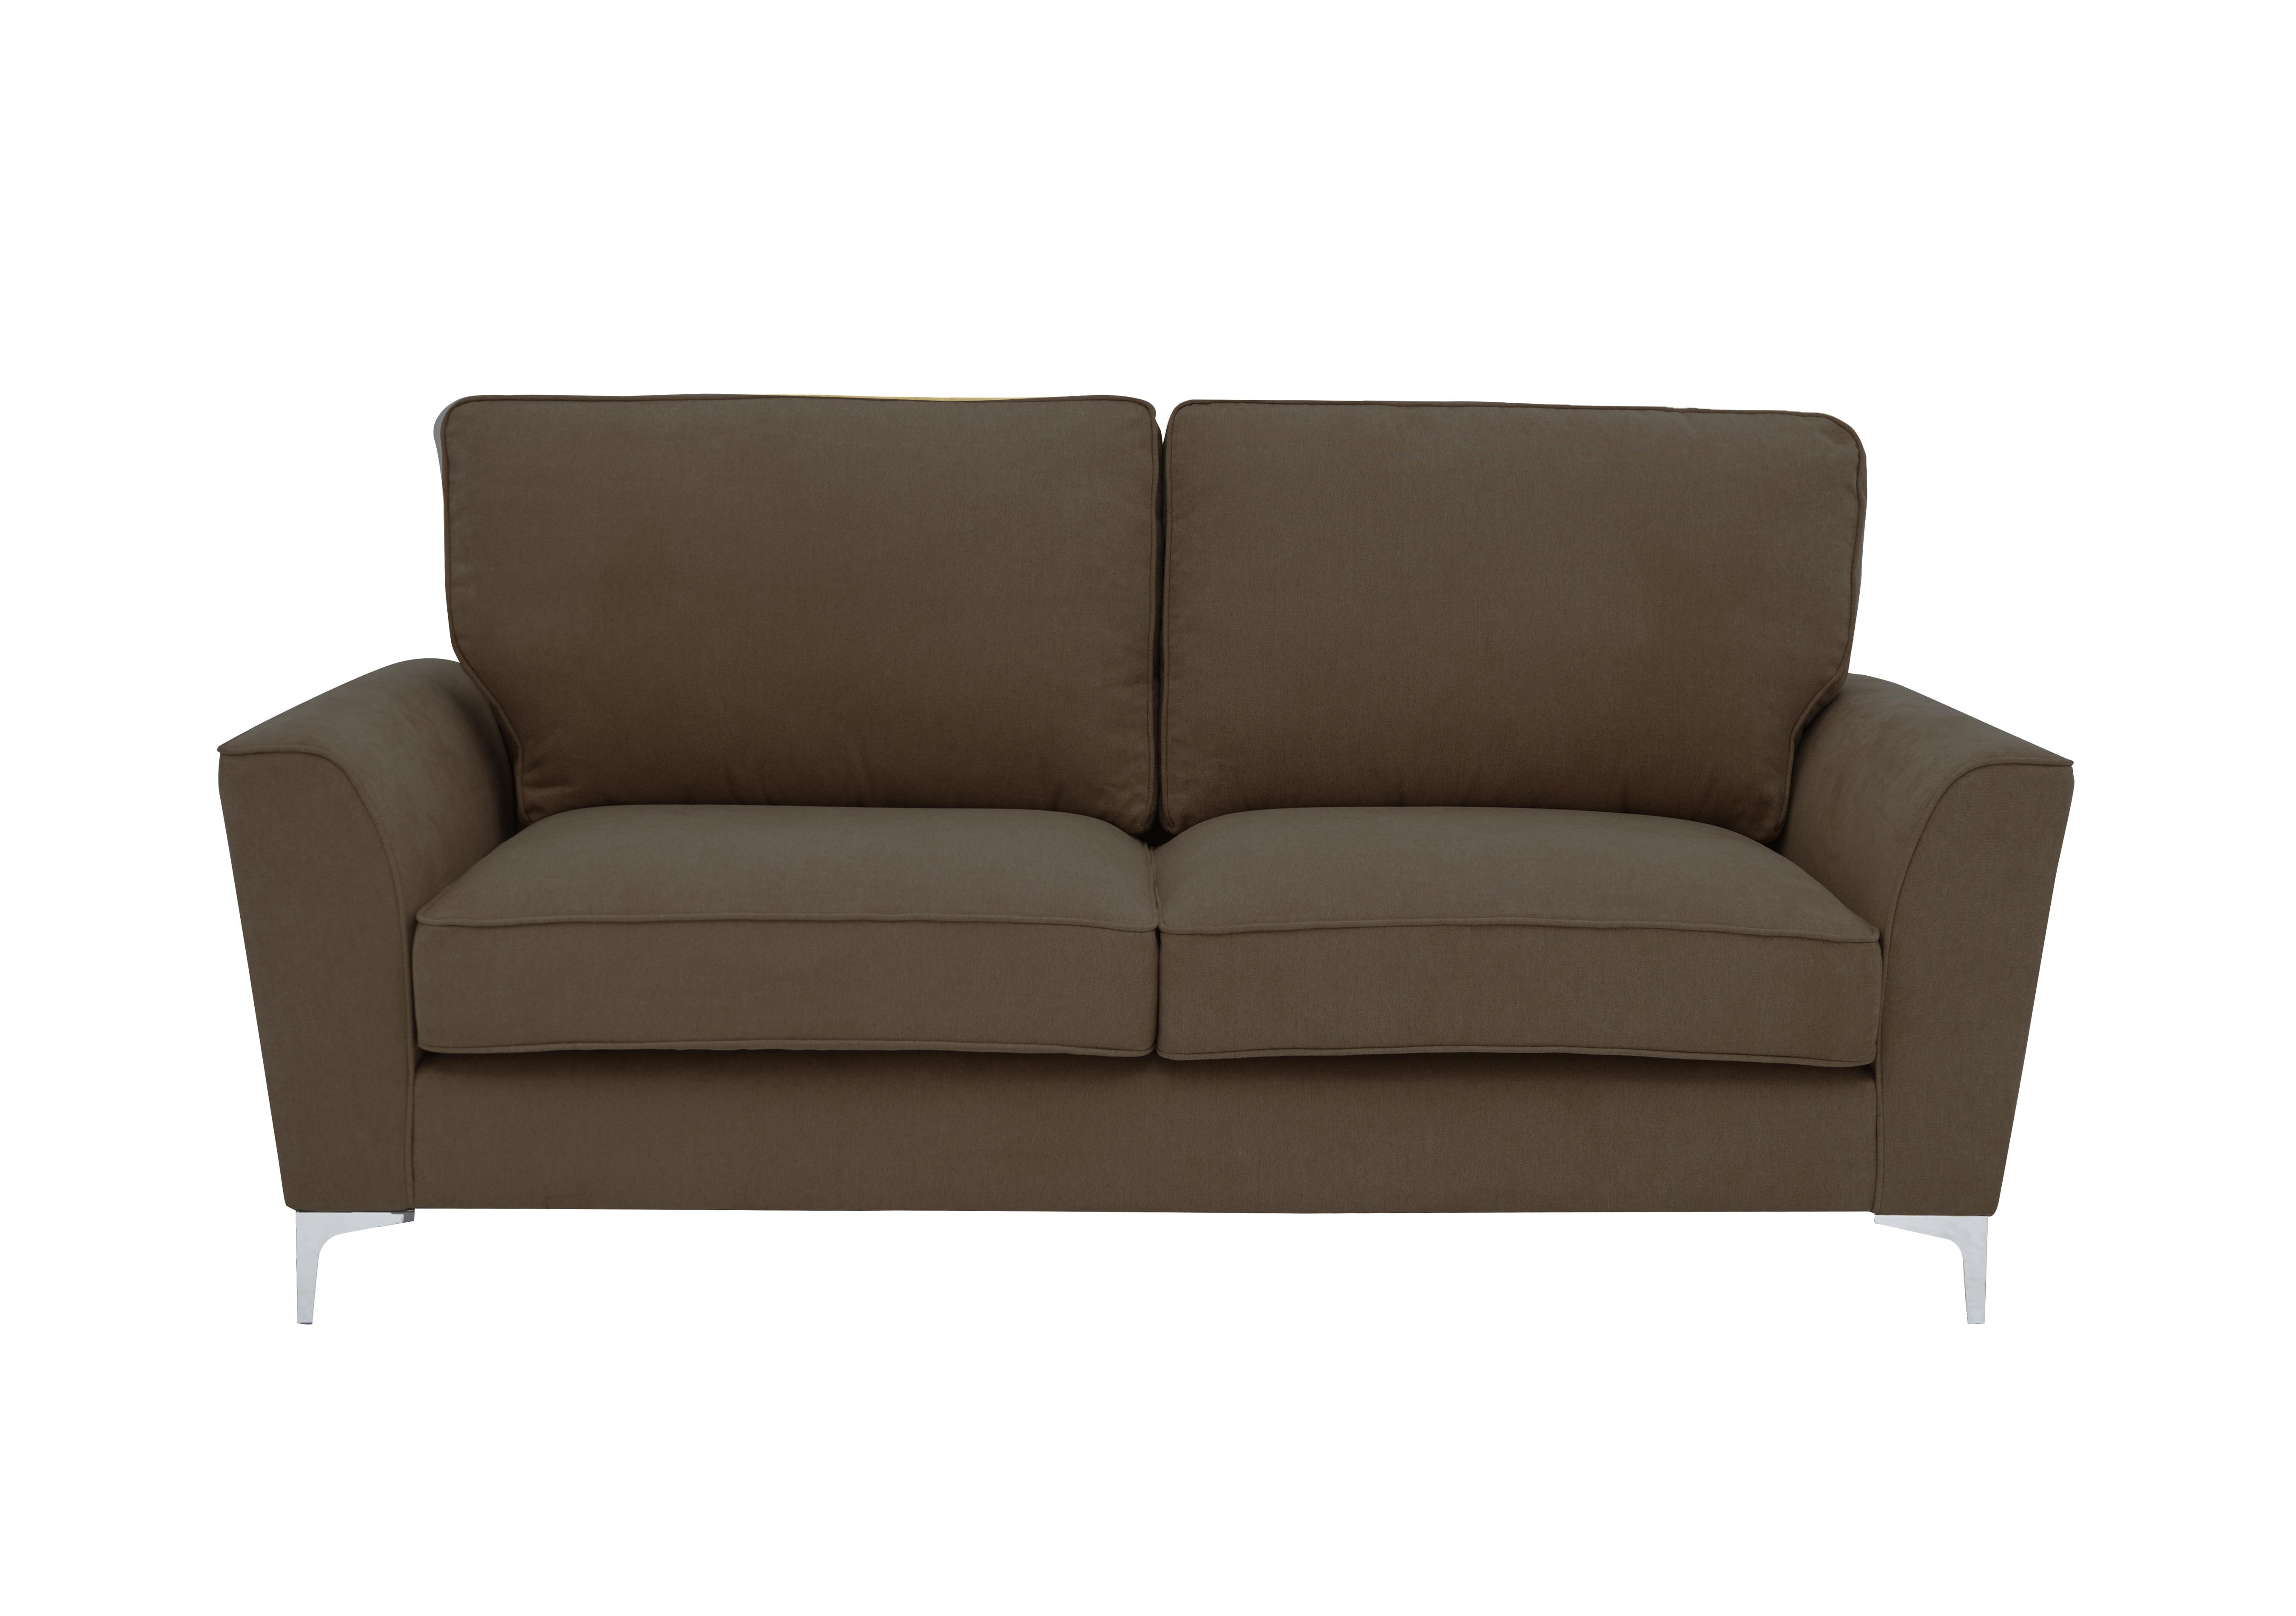 Legend 3 Seater Classic Back Fabric Sofa in Kingston Nutmeg on Furniture Village